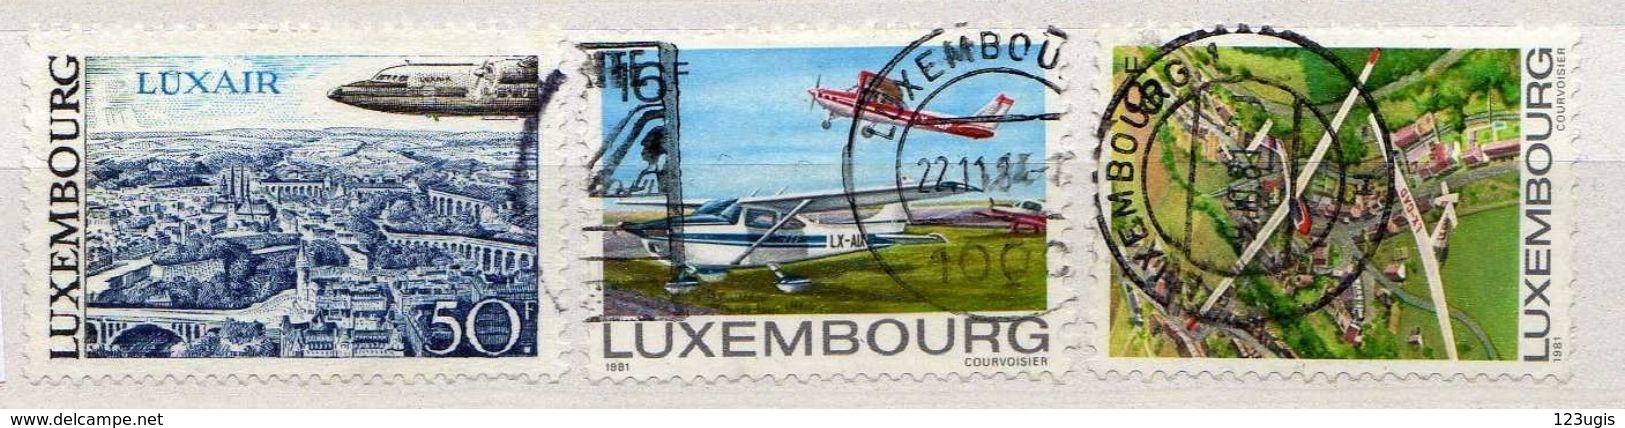 Luxemburg Lot, Gestempelt, Flugpost / Flugzeug / Air Mail / Planes [170717XXI] - Oblitérés